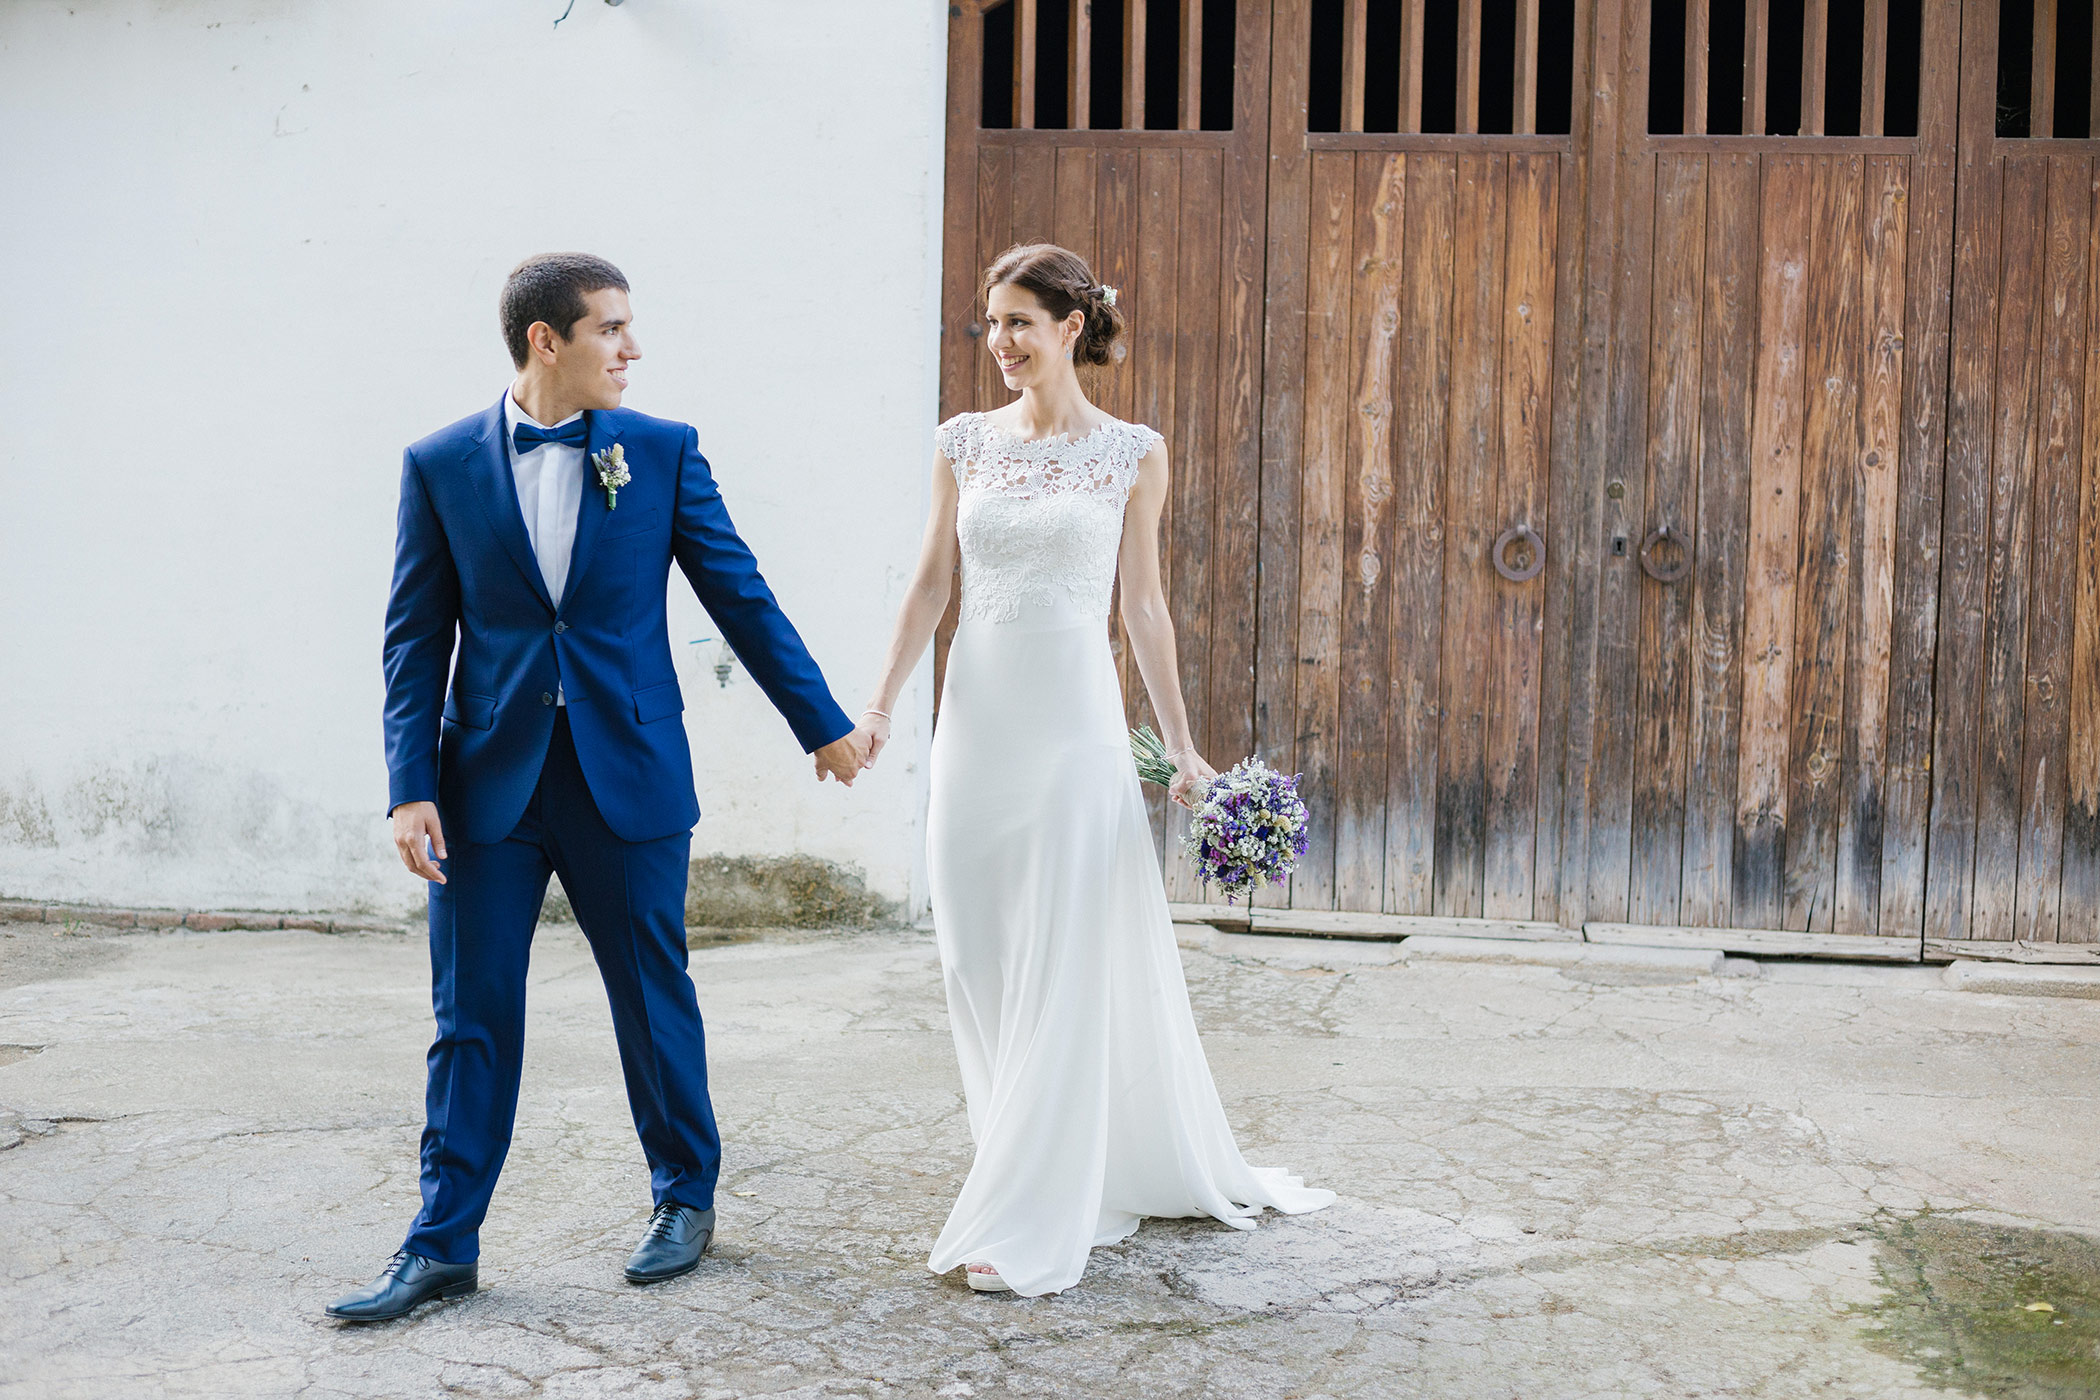 Mas Pujol Wedding Photographer Barcelona | Lena Karelova Photography | Destination Wedding Photographer Barcelona |Film Wedding Photographer